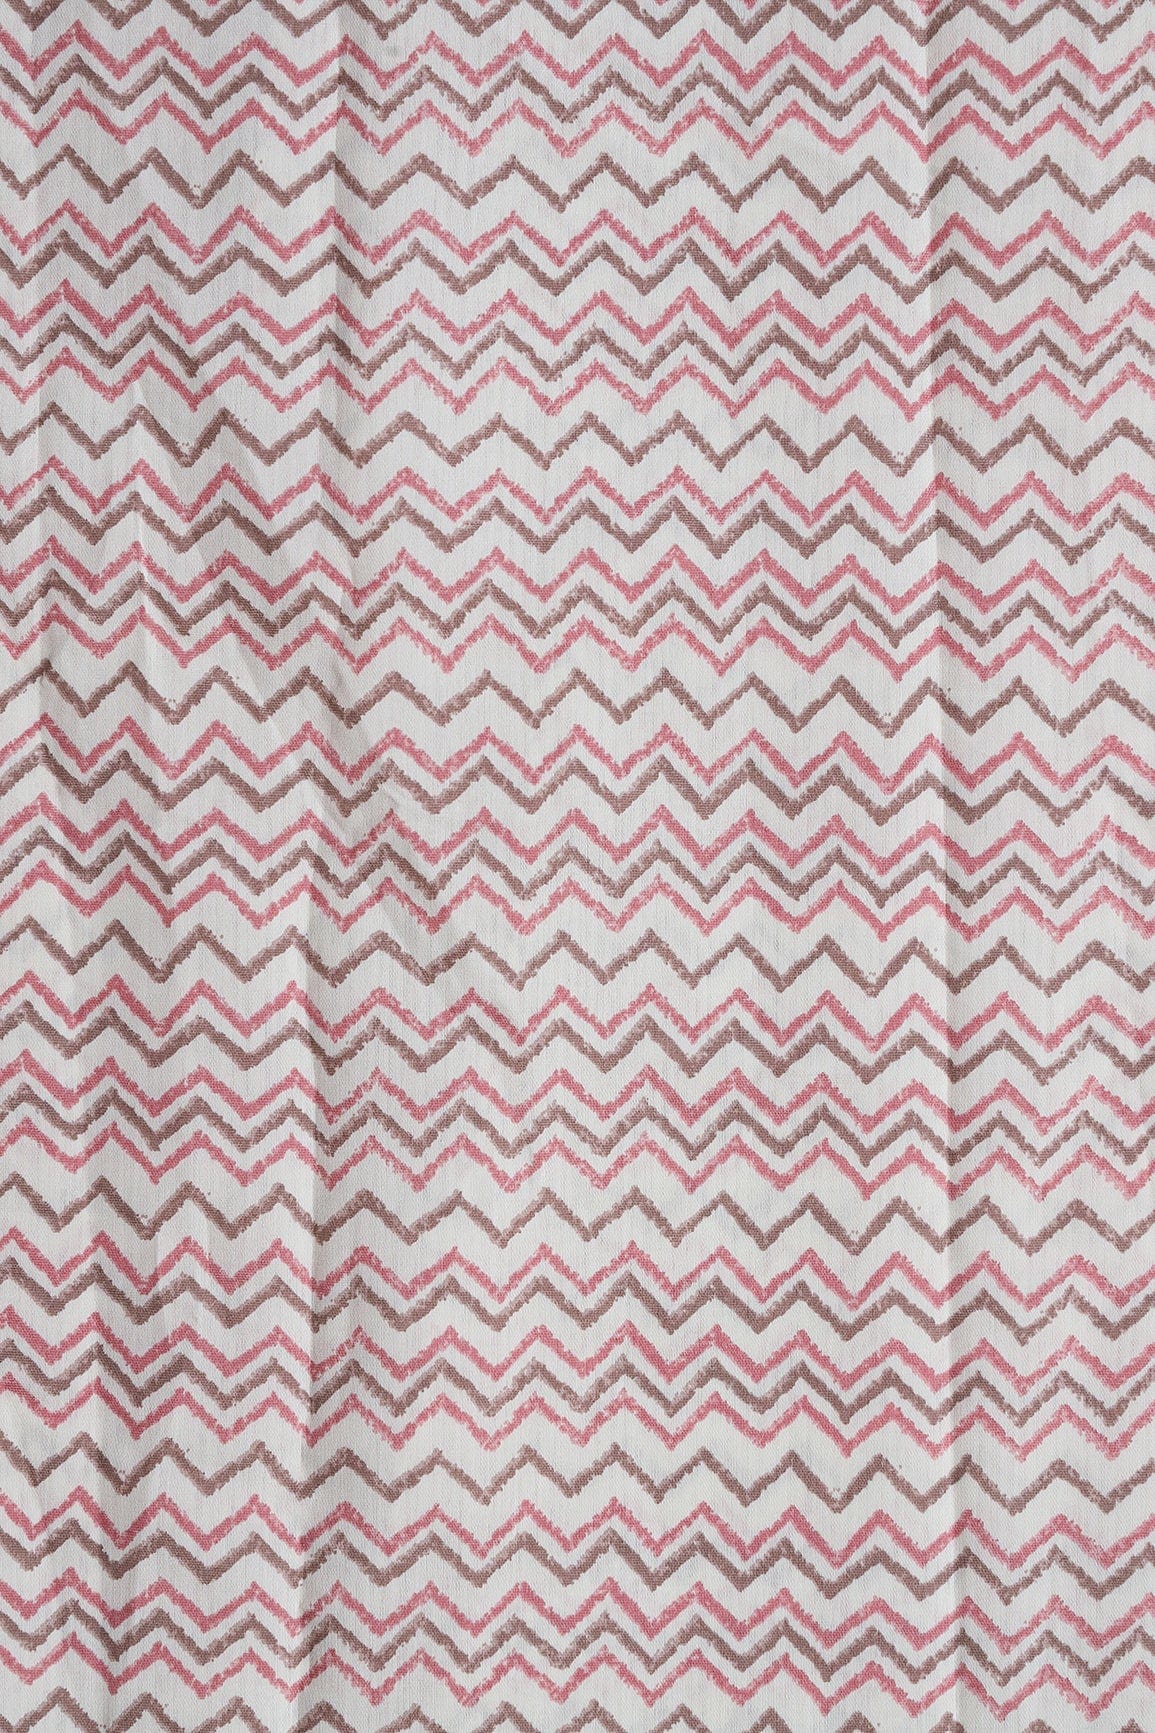 doeraa Prints Mystic Pink And Brown Chevron Print On Cream Viscose Chanderi Silk Fabric